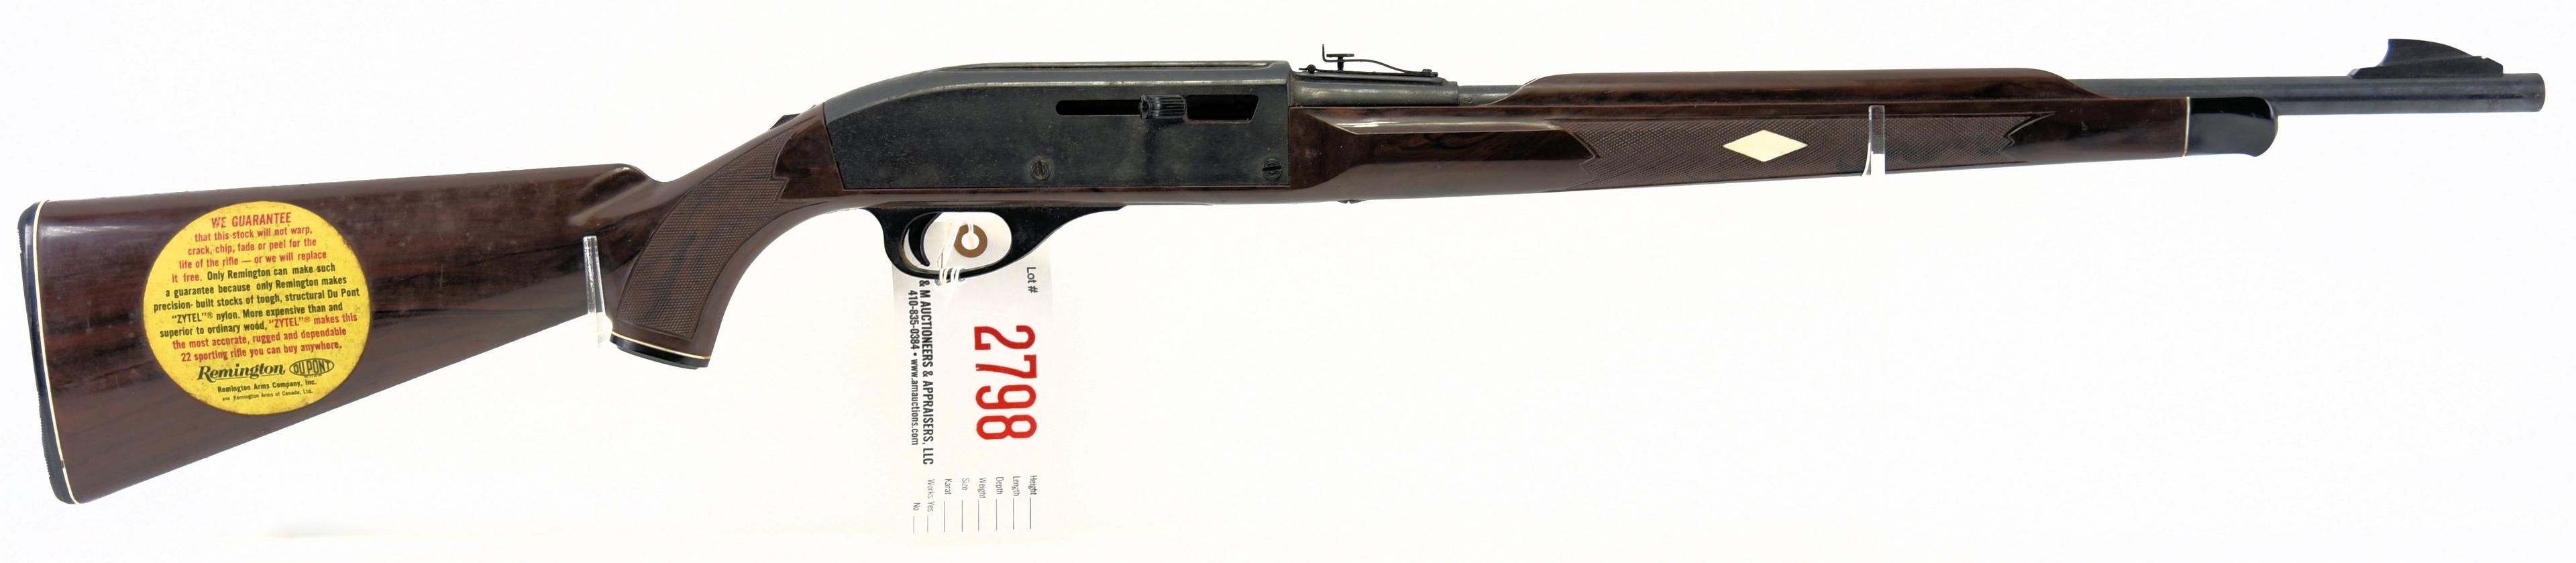 Remington Arms Co Nylon 66 Semi Auto Rifle .22 LR MODERN/C&R